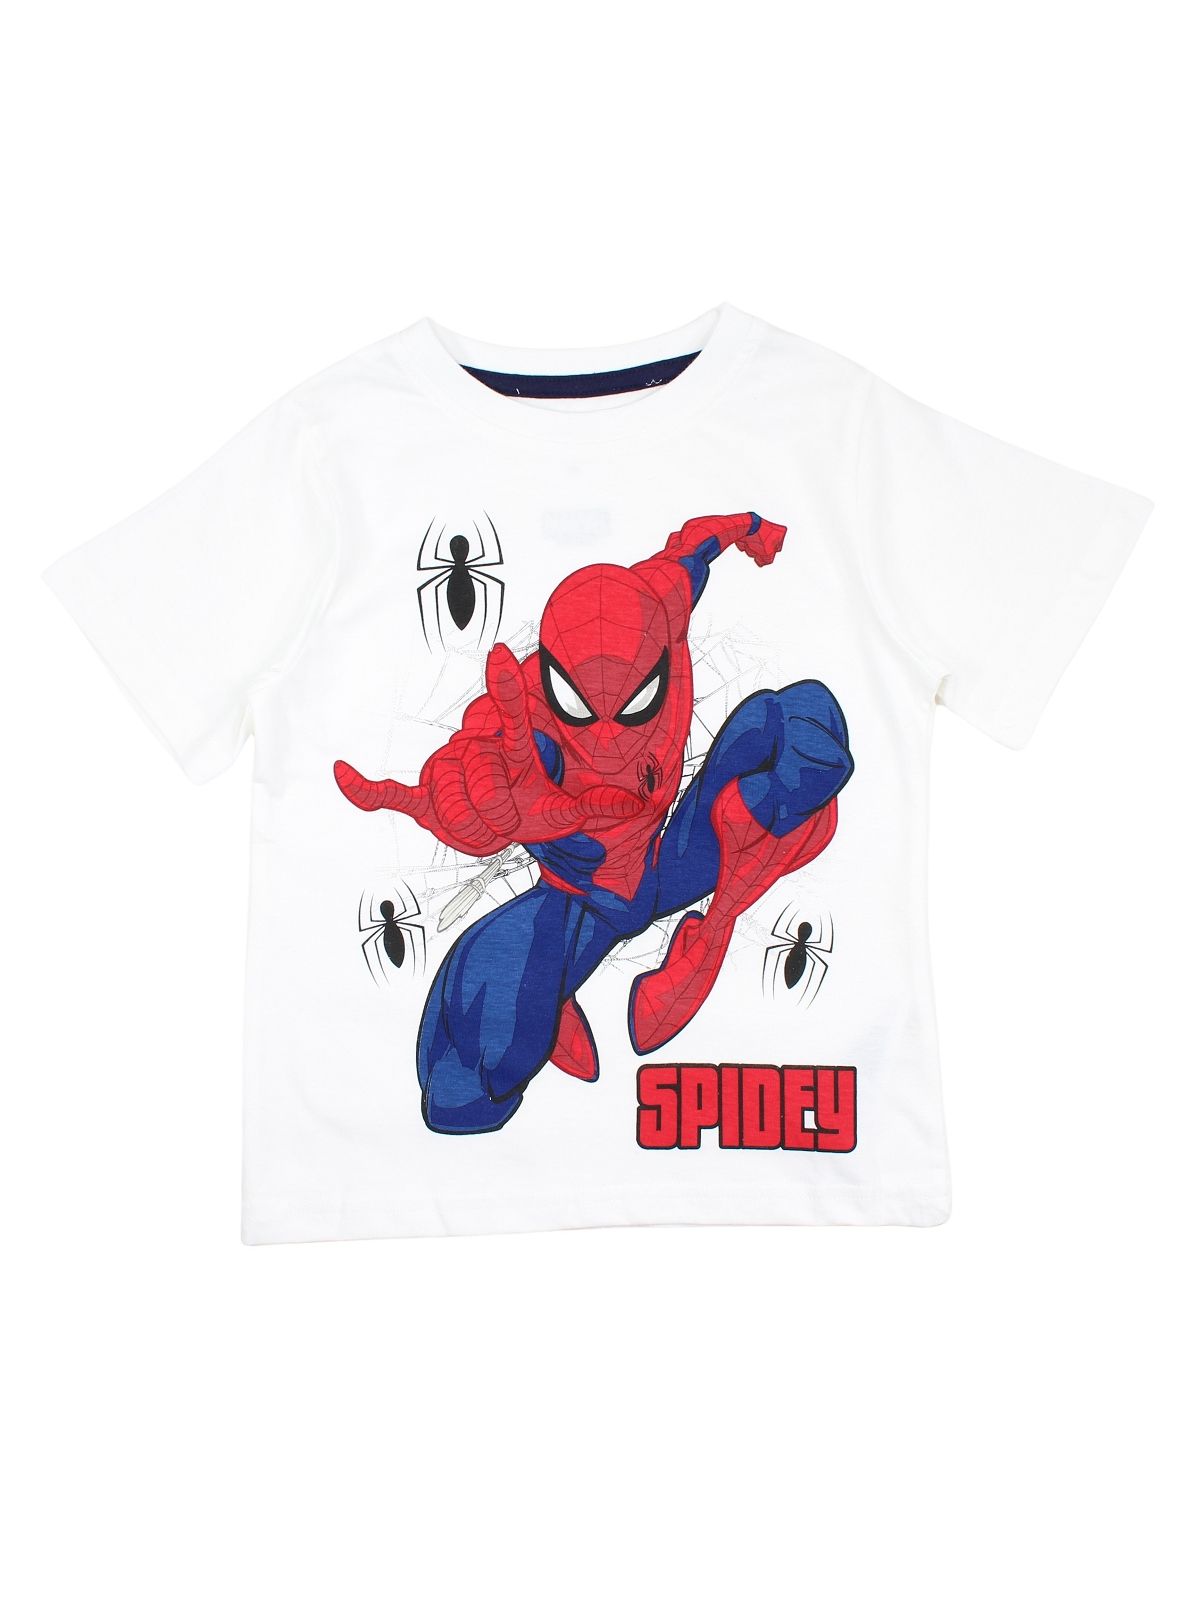 Spiderman set